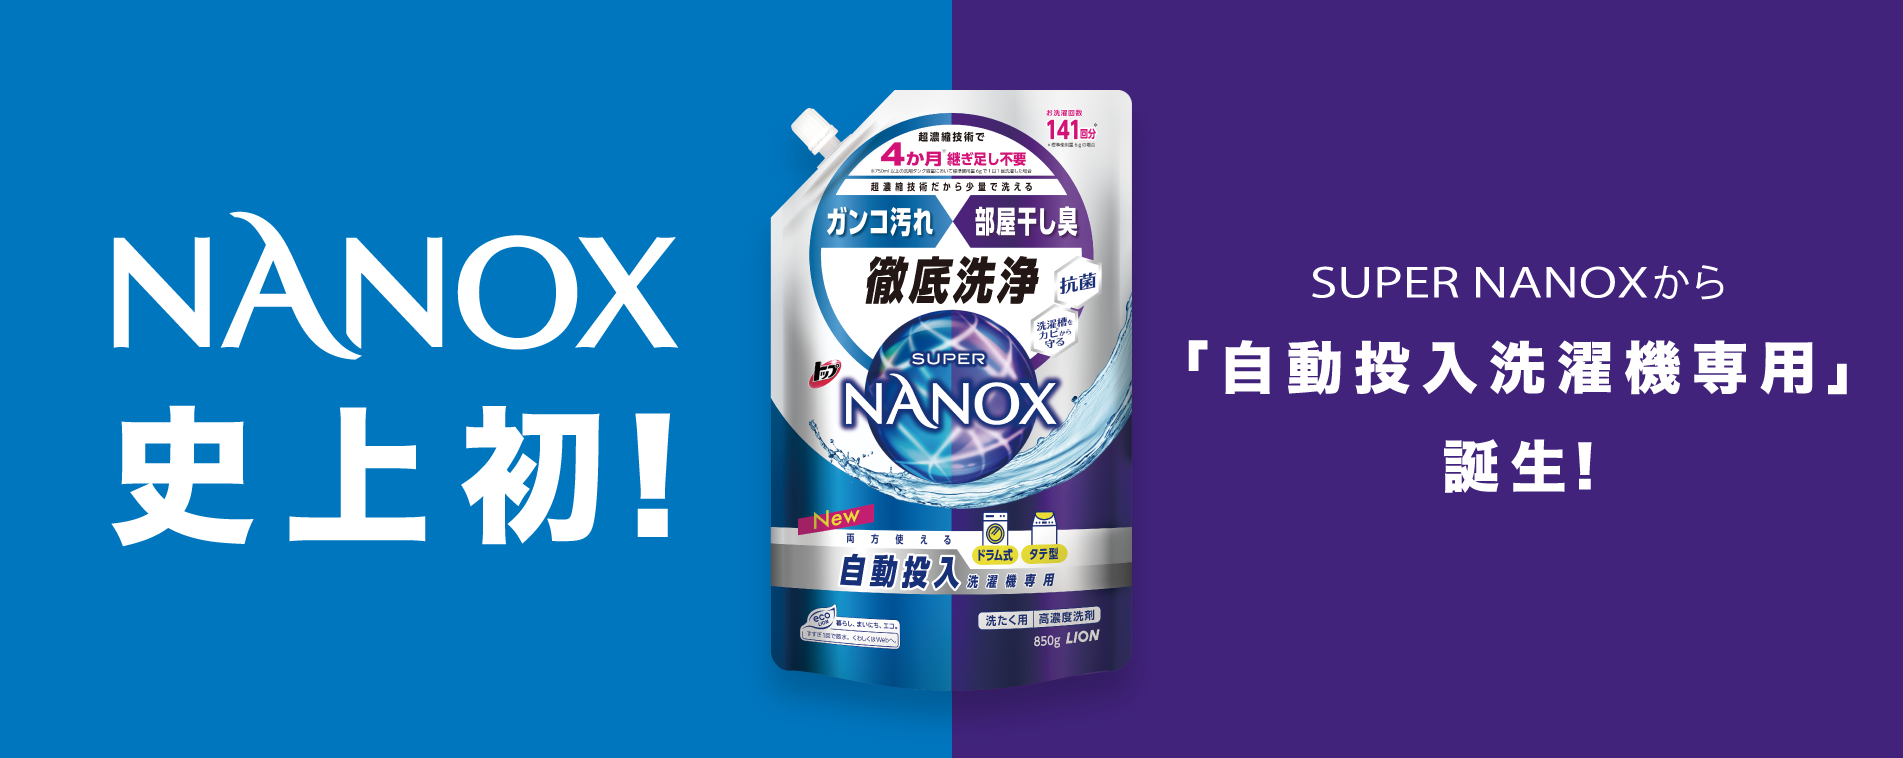 NANOX史上初! SUPER NANOXから「自動投入洗濯機専用」誕生!